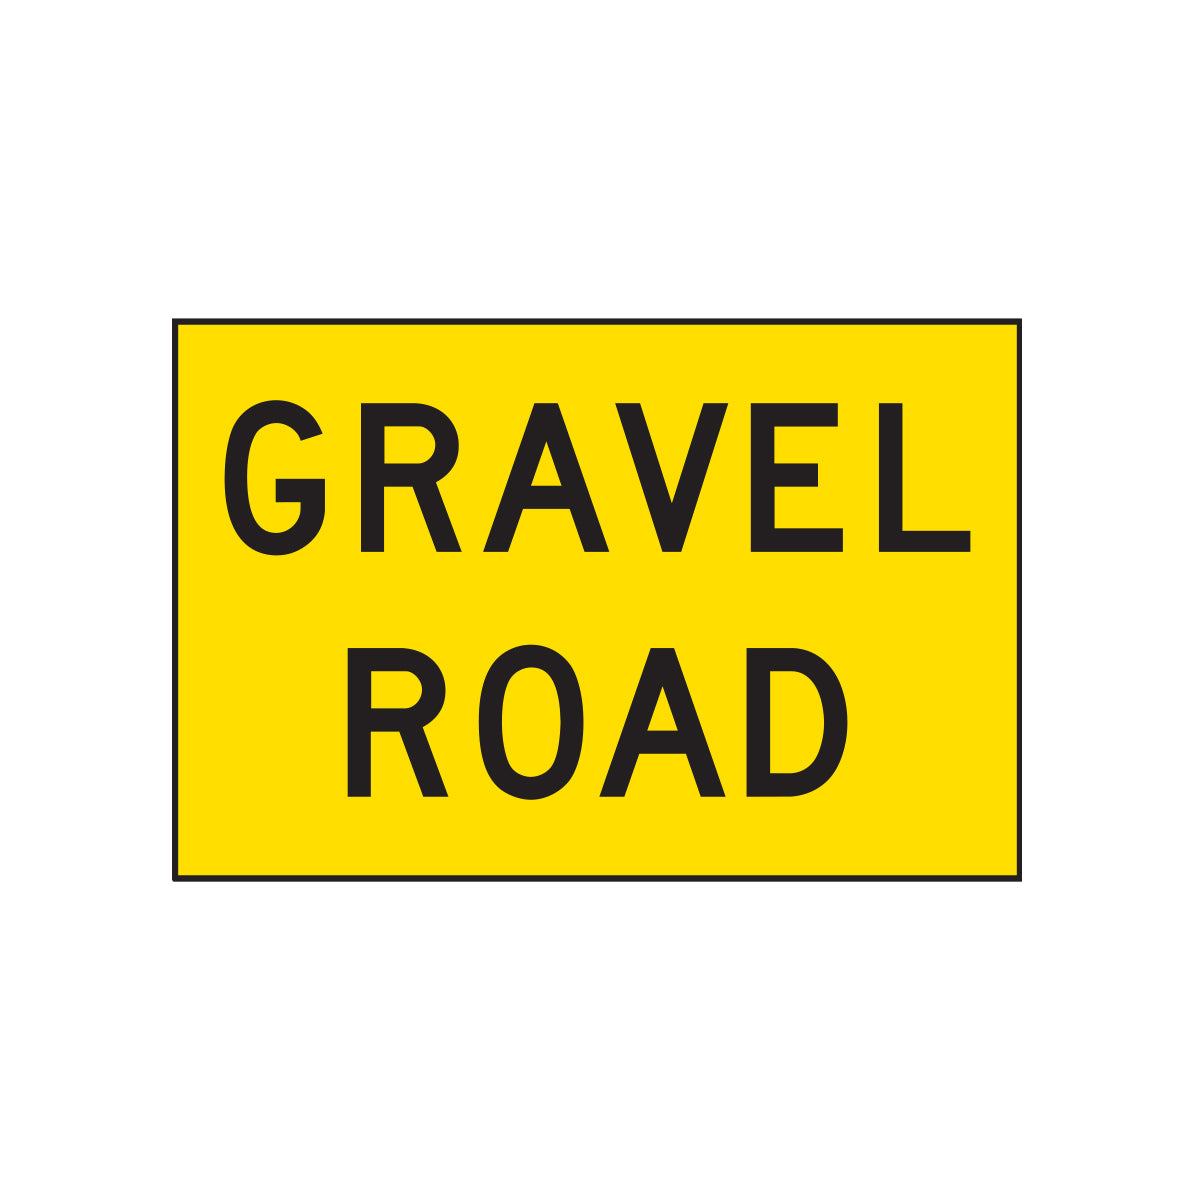 Warning: Gravel Road Sign